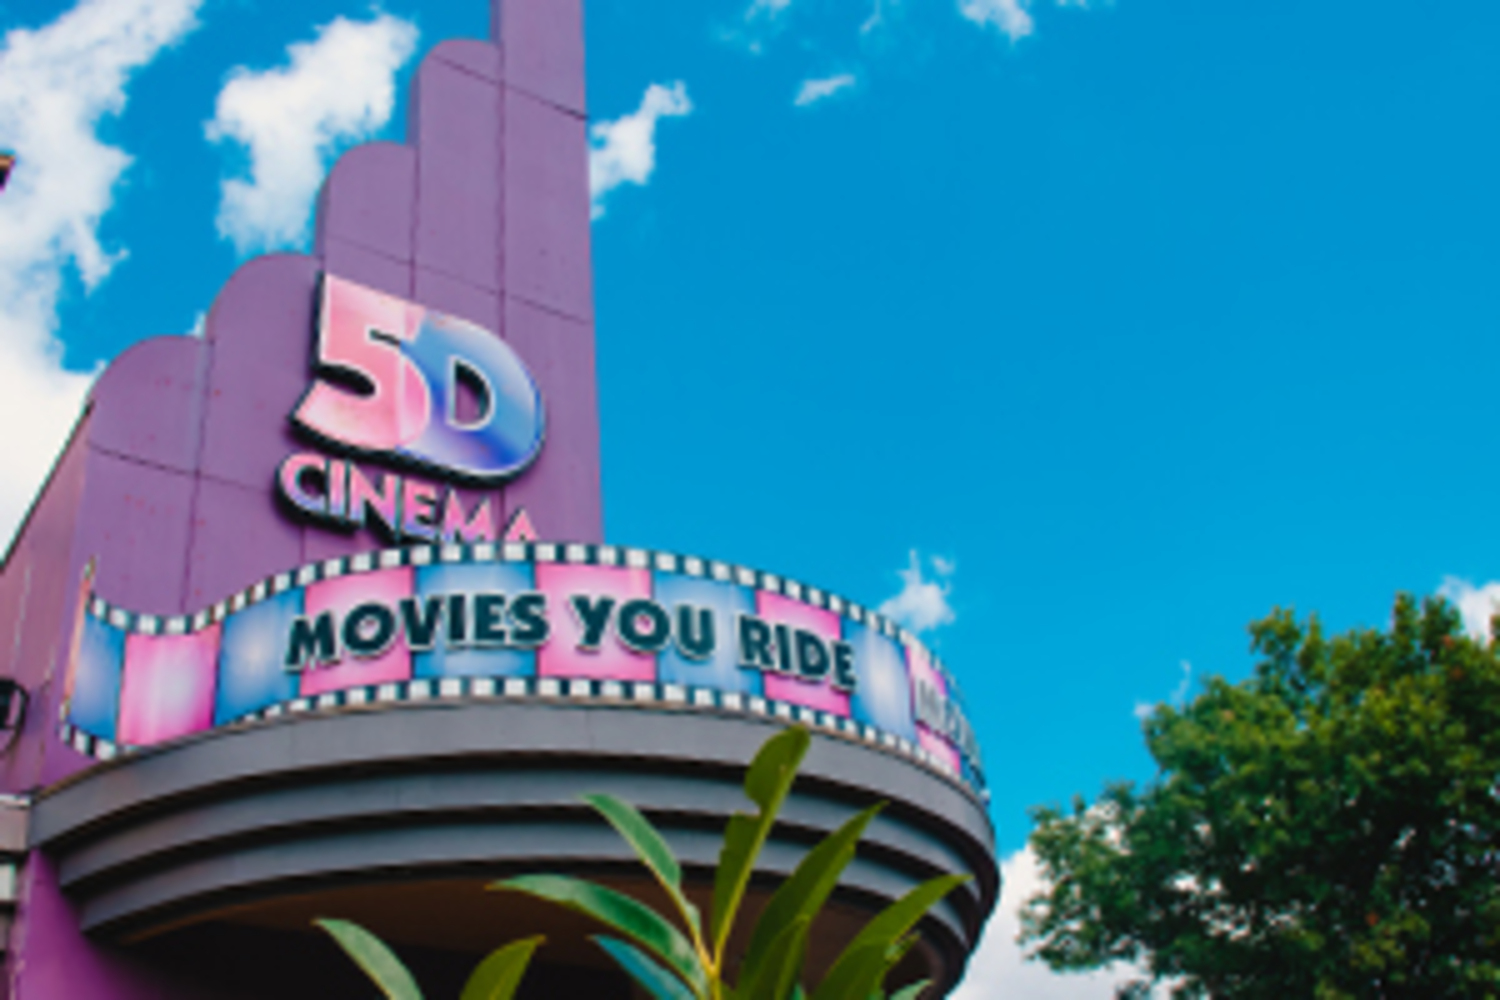 5-D Cinema